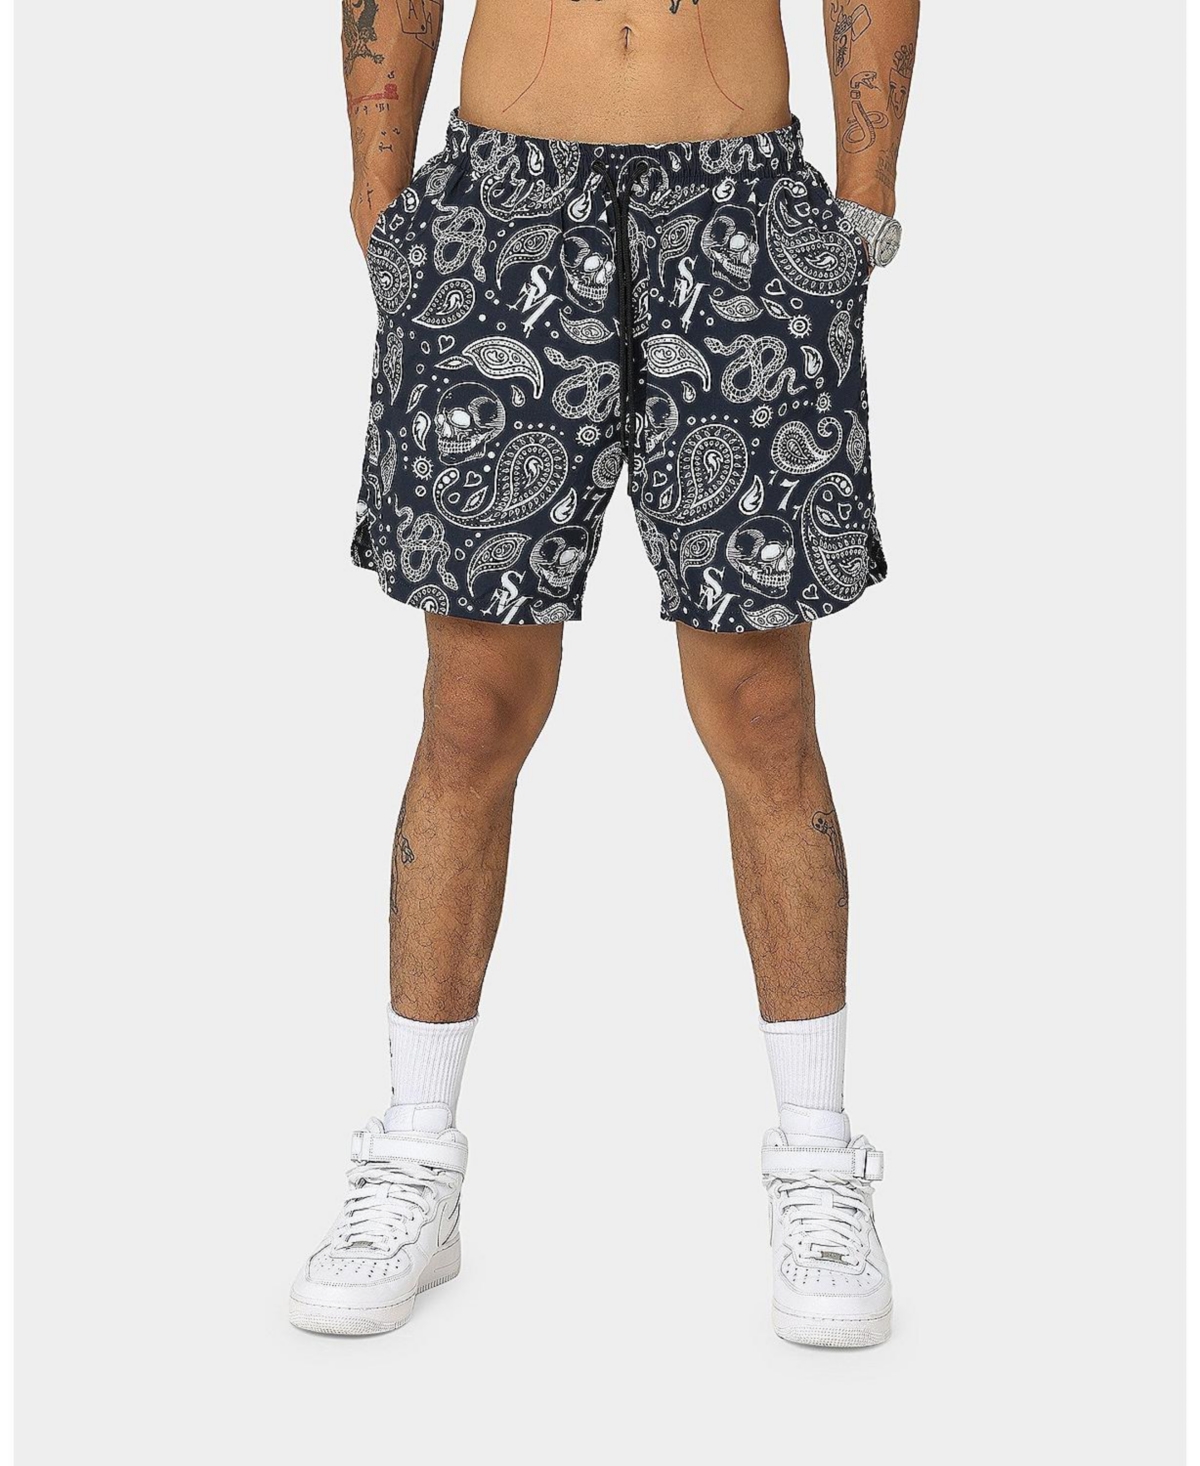 Paisley Skulls Beach Shorts - Navy/white